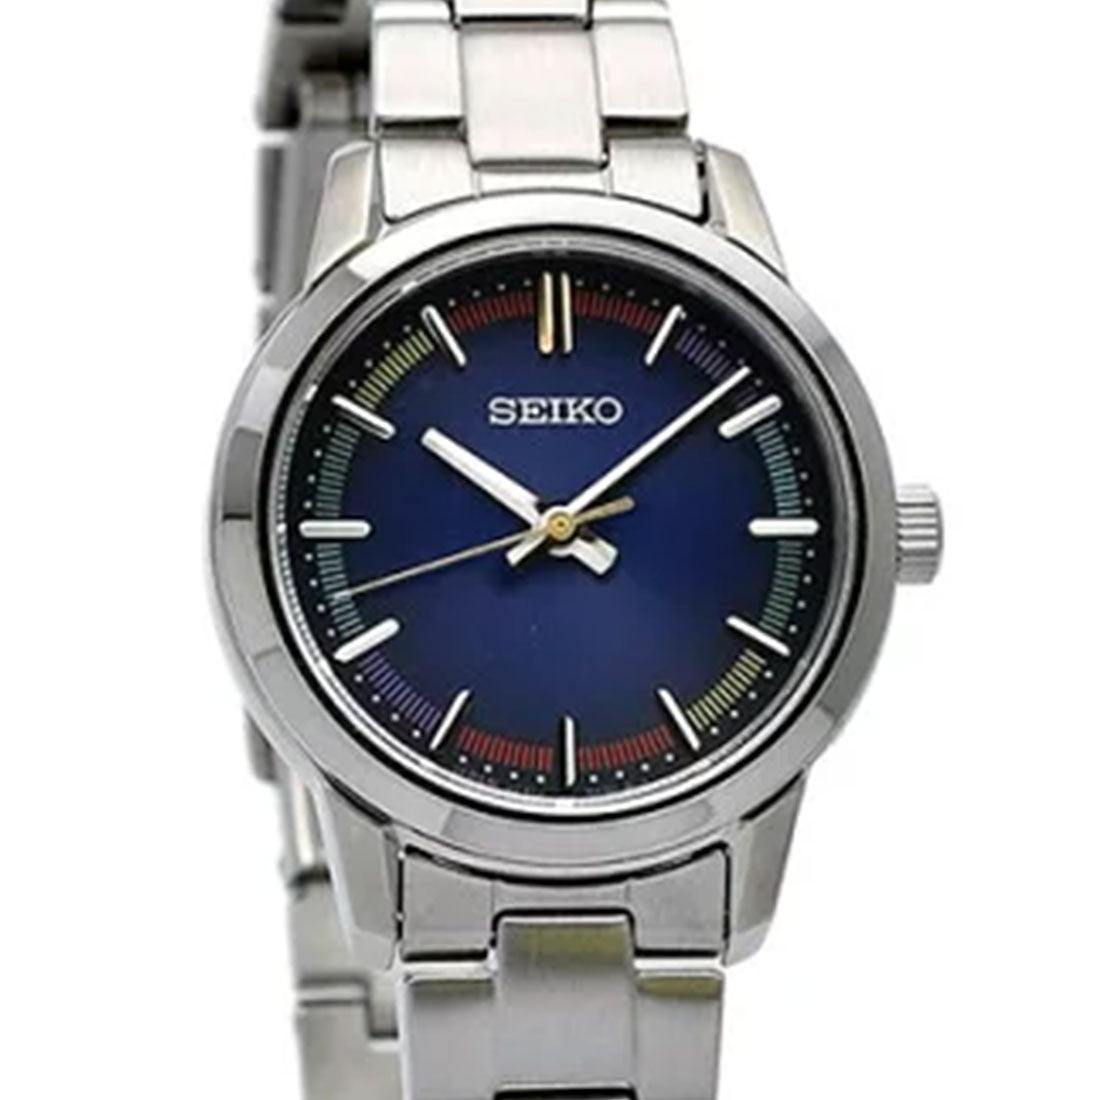 Seiko 2020 Selection STPX079 Summer Limited Edition Ladies JDM Watch -Seiko